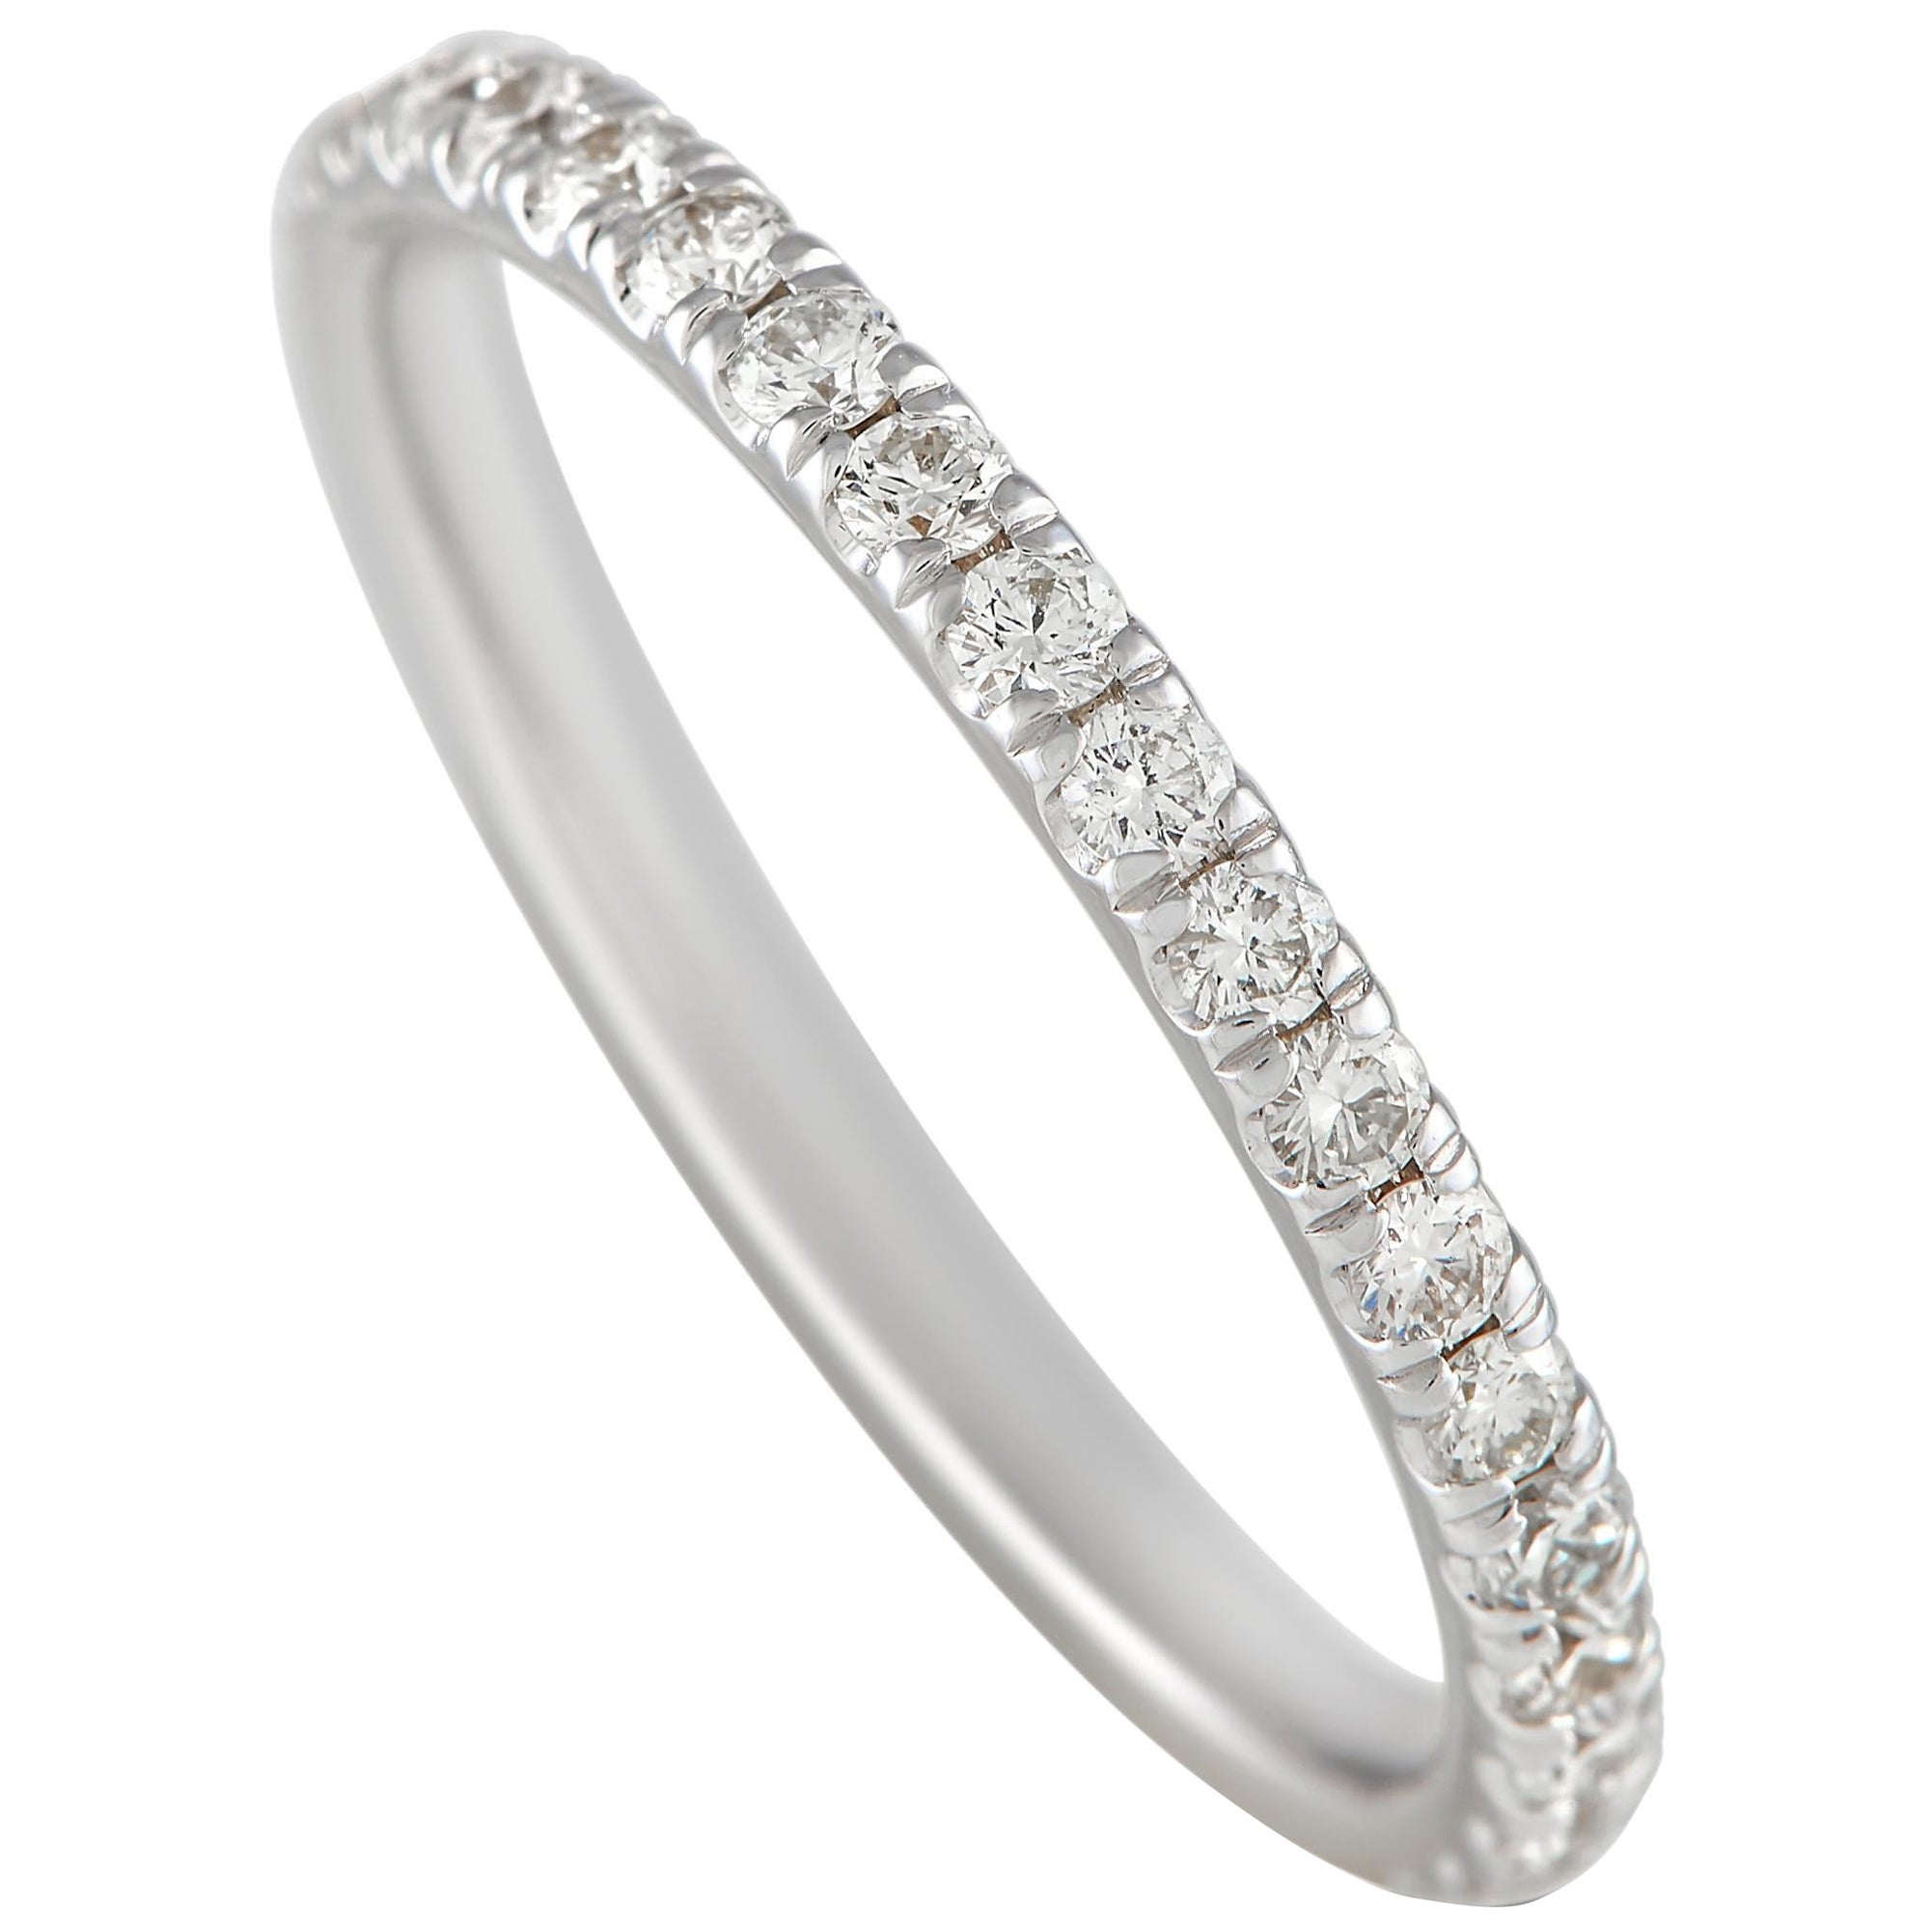 LB Exclusive 14k White Gold 0.63 Carat Diamond Eternity Band Ring